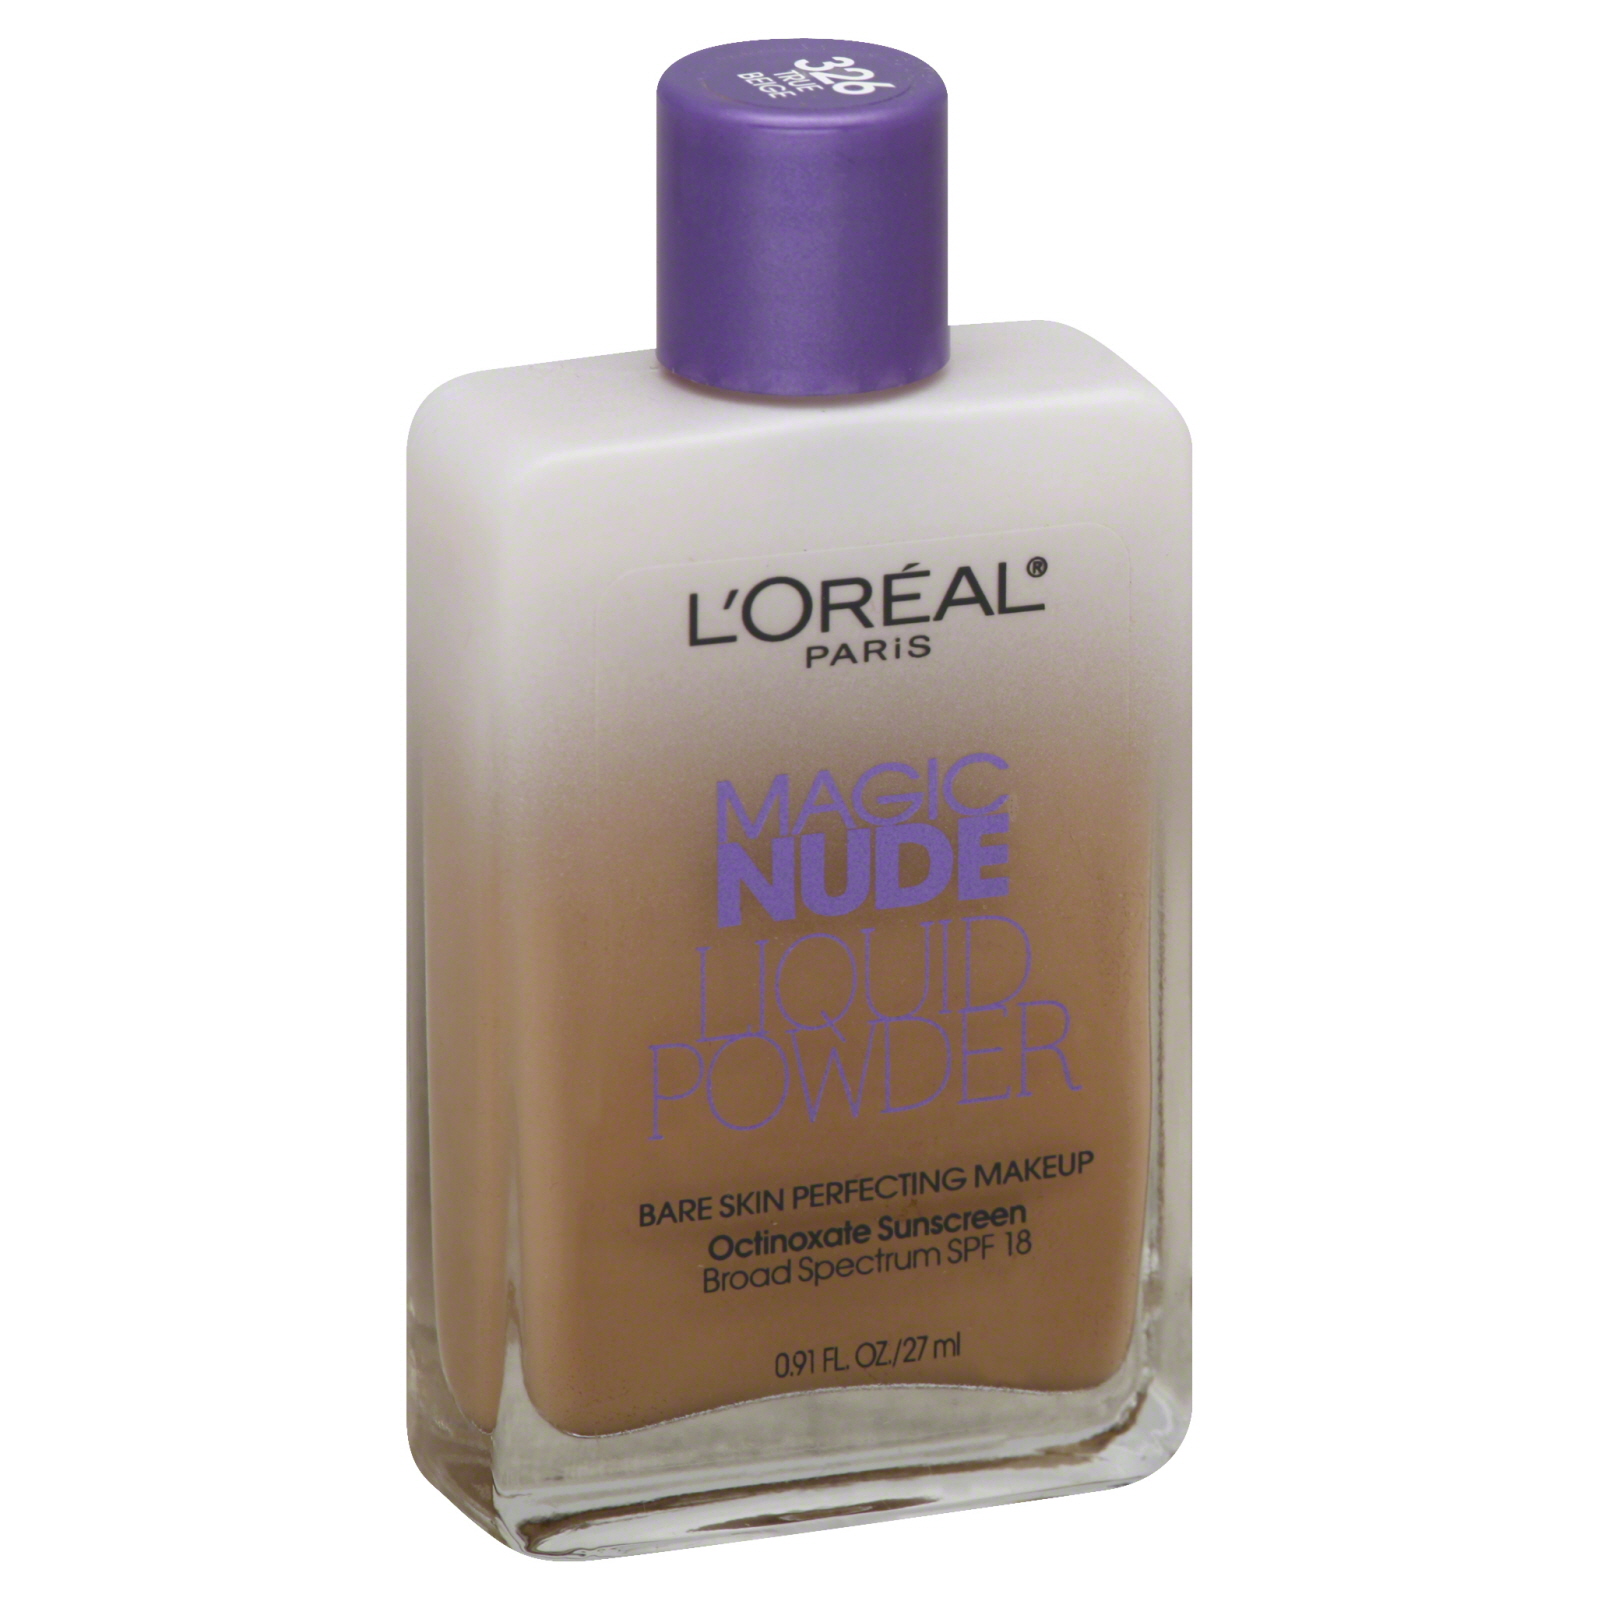 L'Oreal Magic Nude Liquid Powder, True Beige, SPF 18, 0.91 fl oz